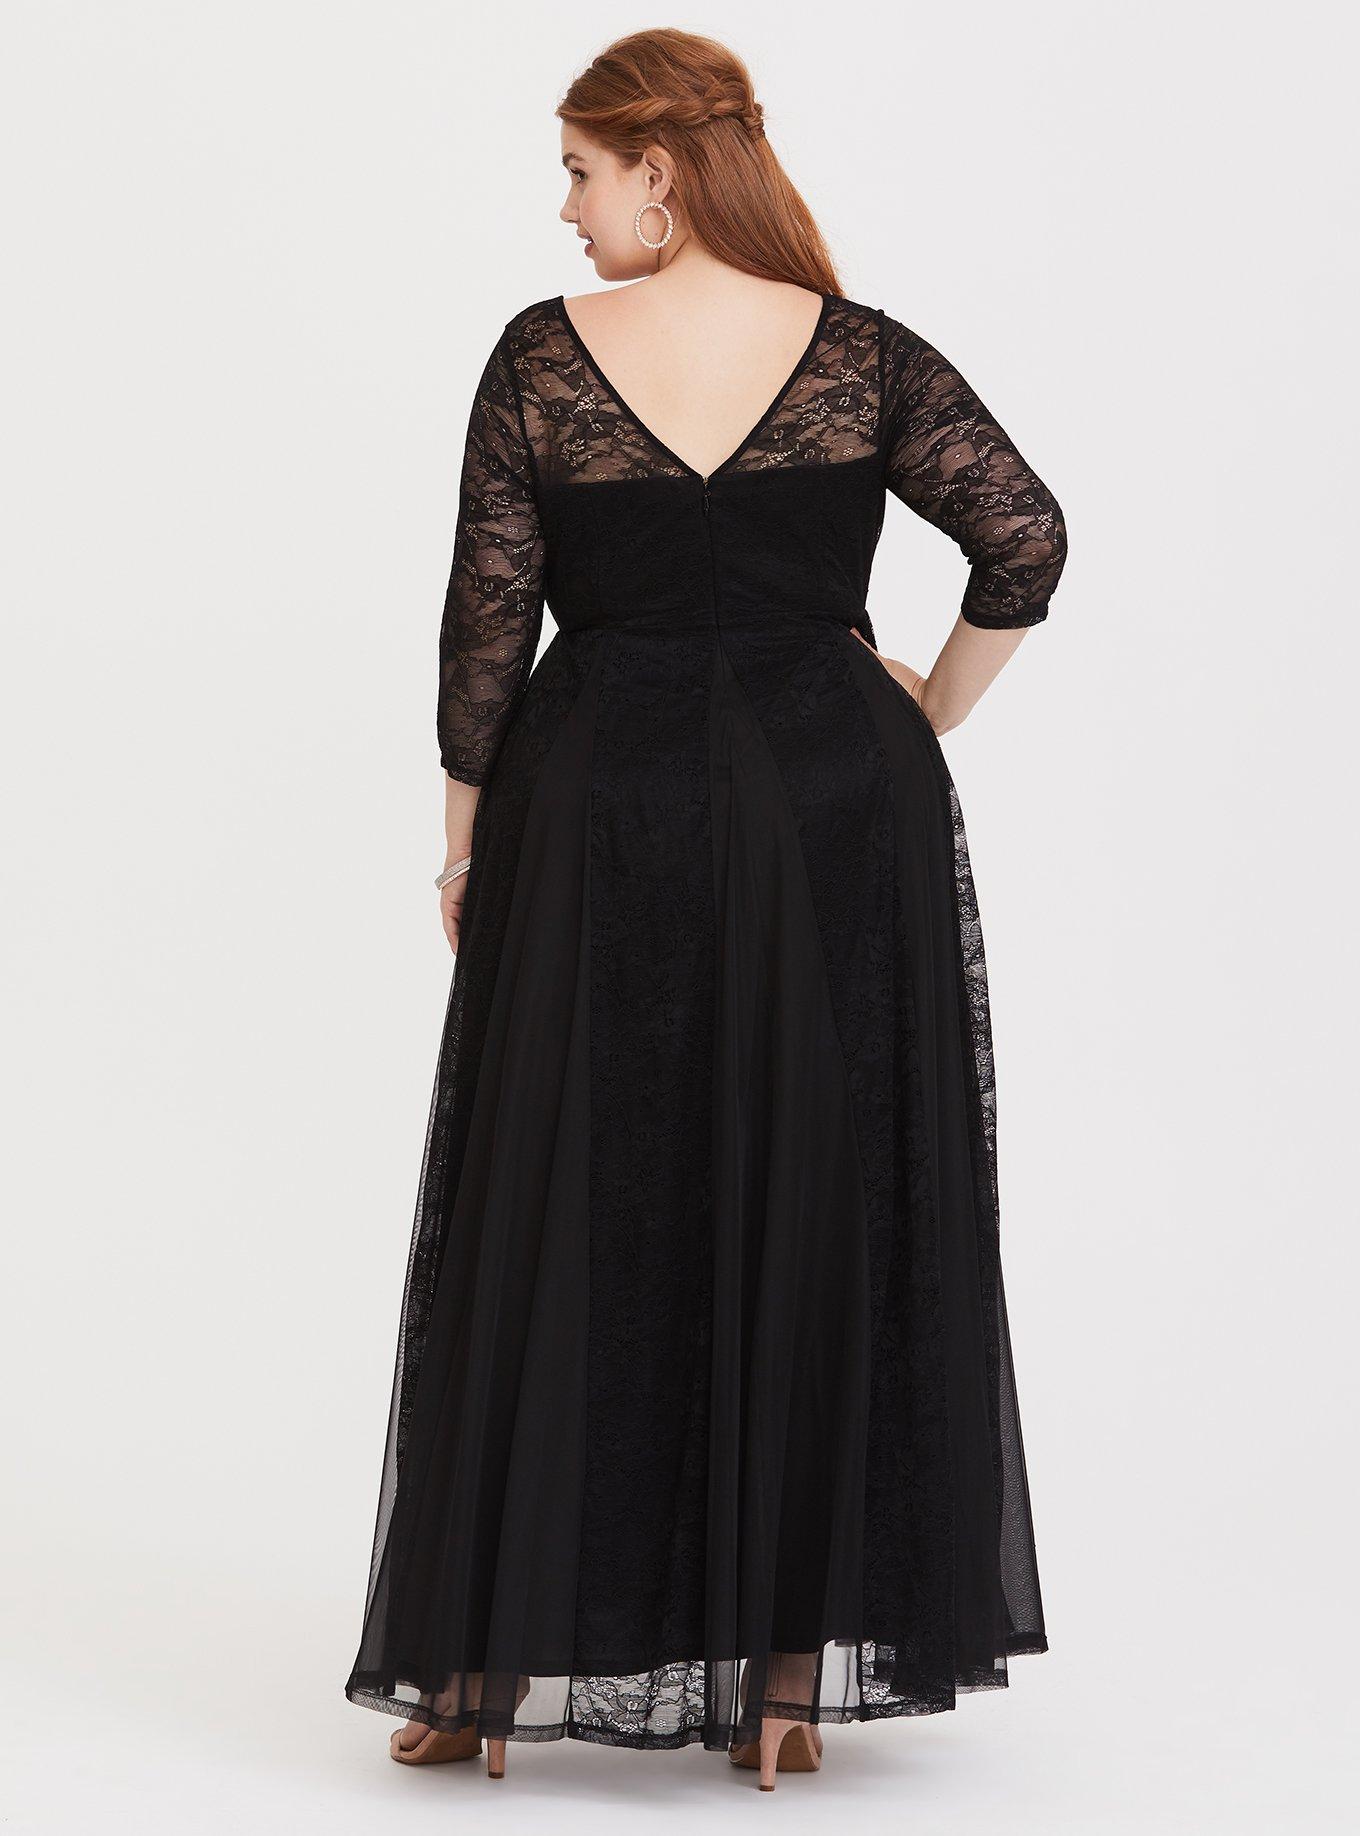 Plus Size - Special Occasion Black Lace Illusion Gown - Torrid